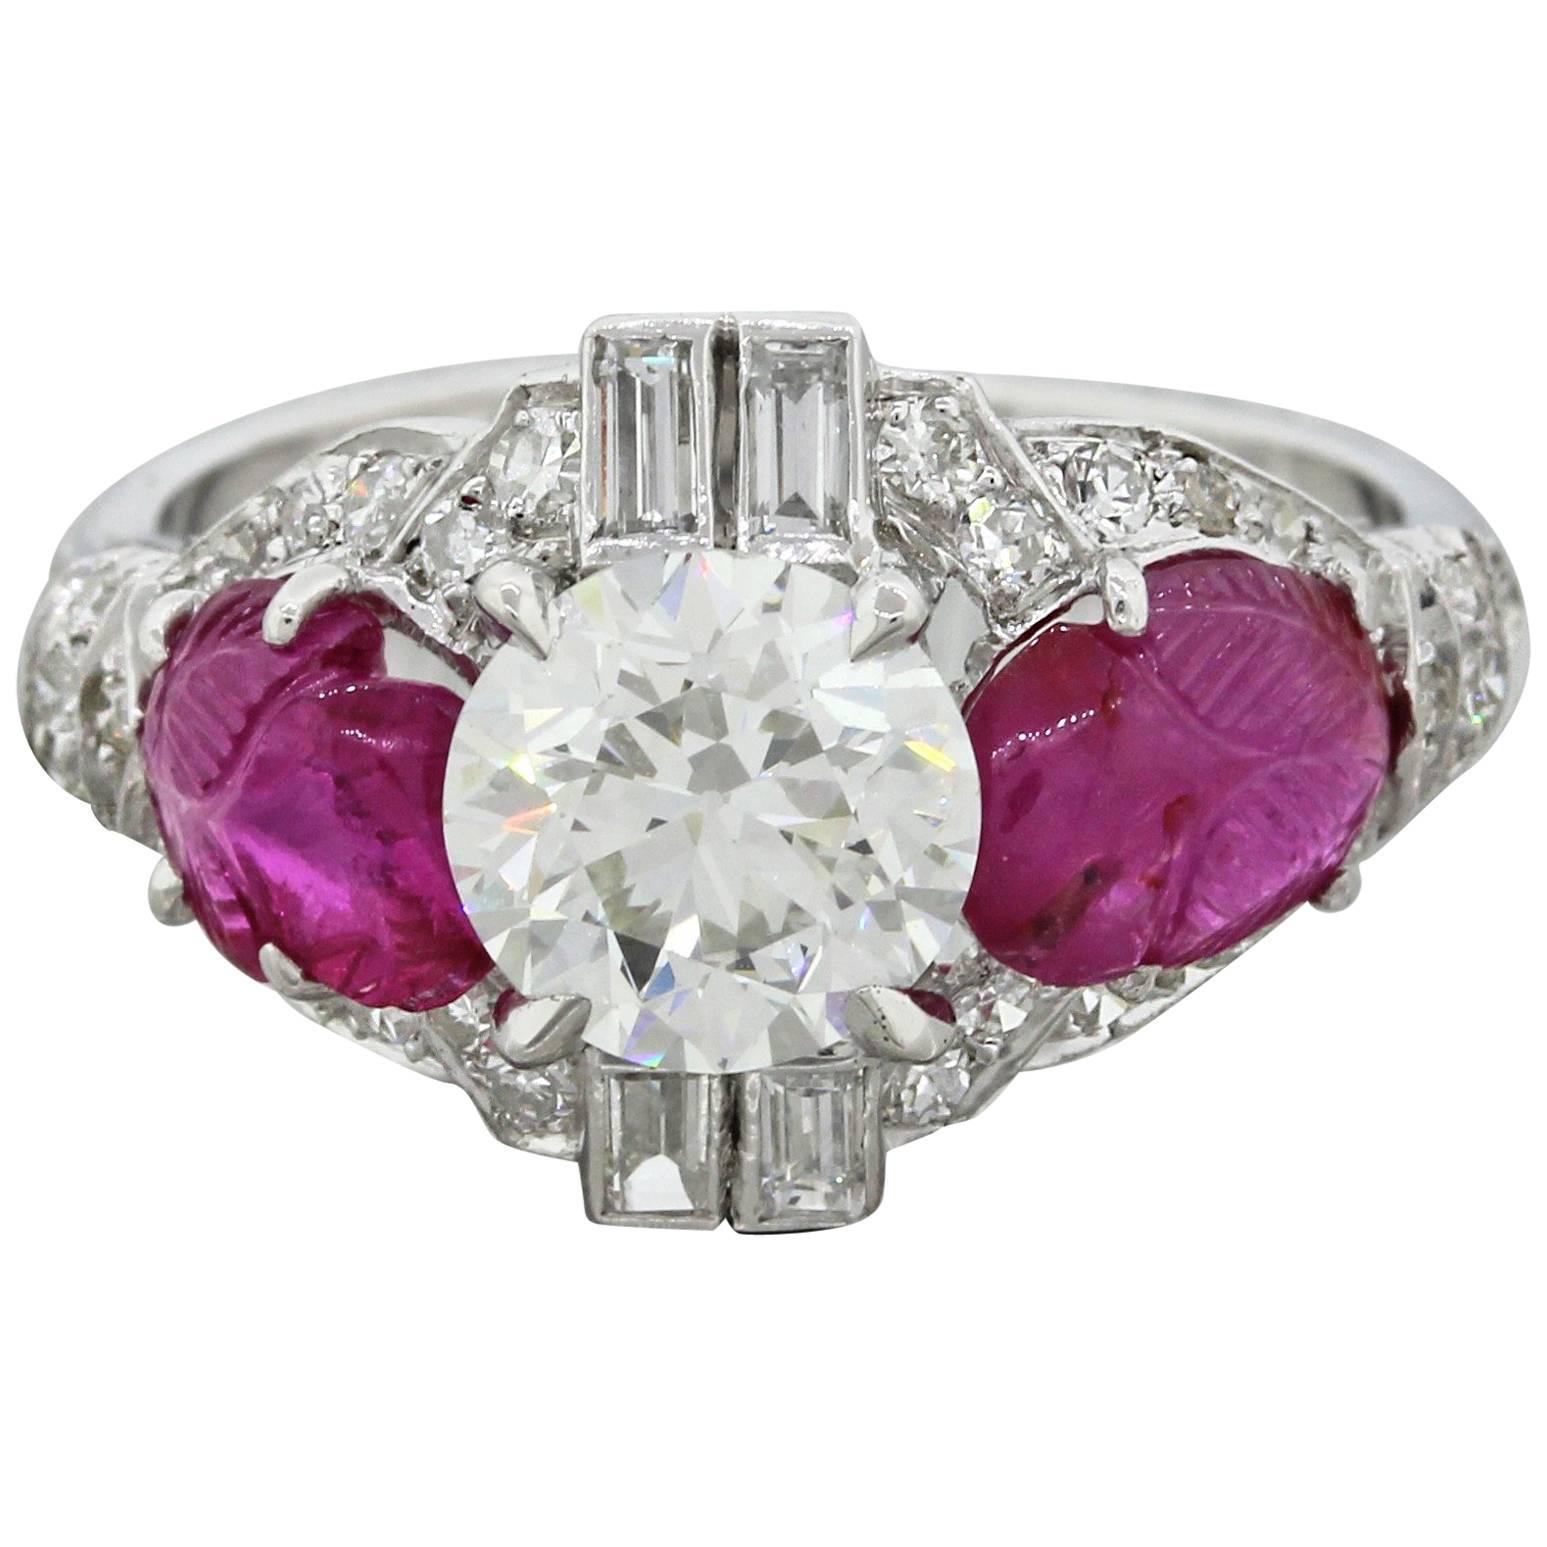 1920 Antique Art Deco 2.50 carat Diamond Rubies Platinum Engagement Ring For Sale